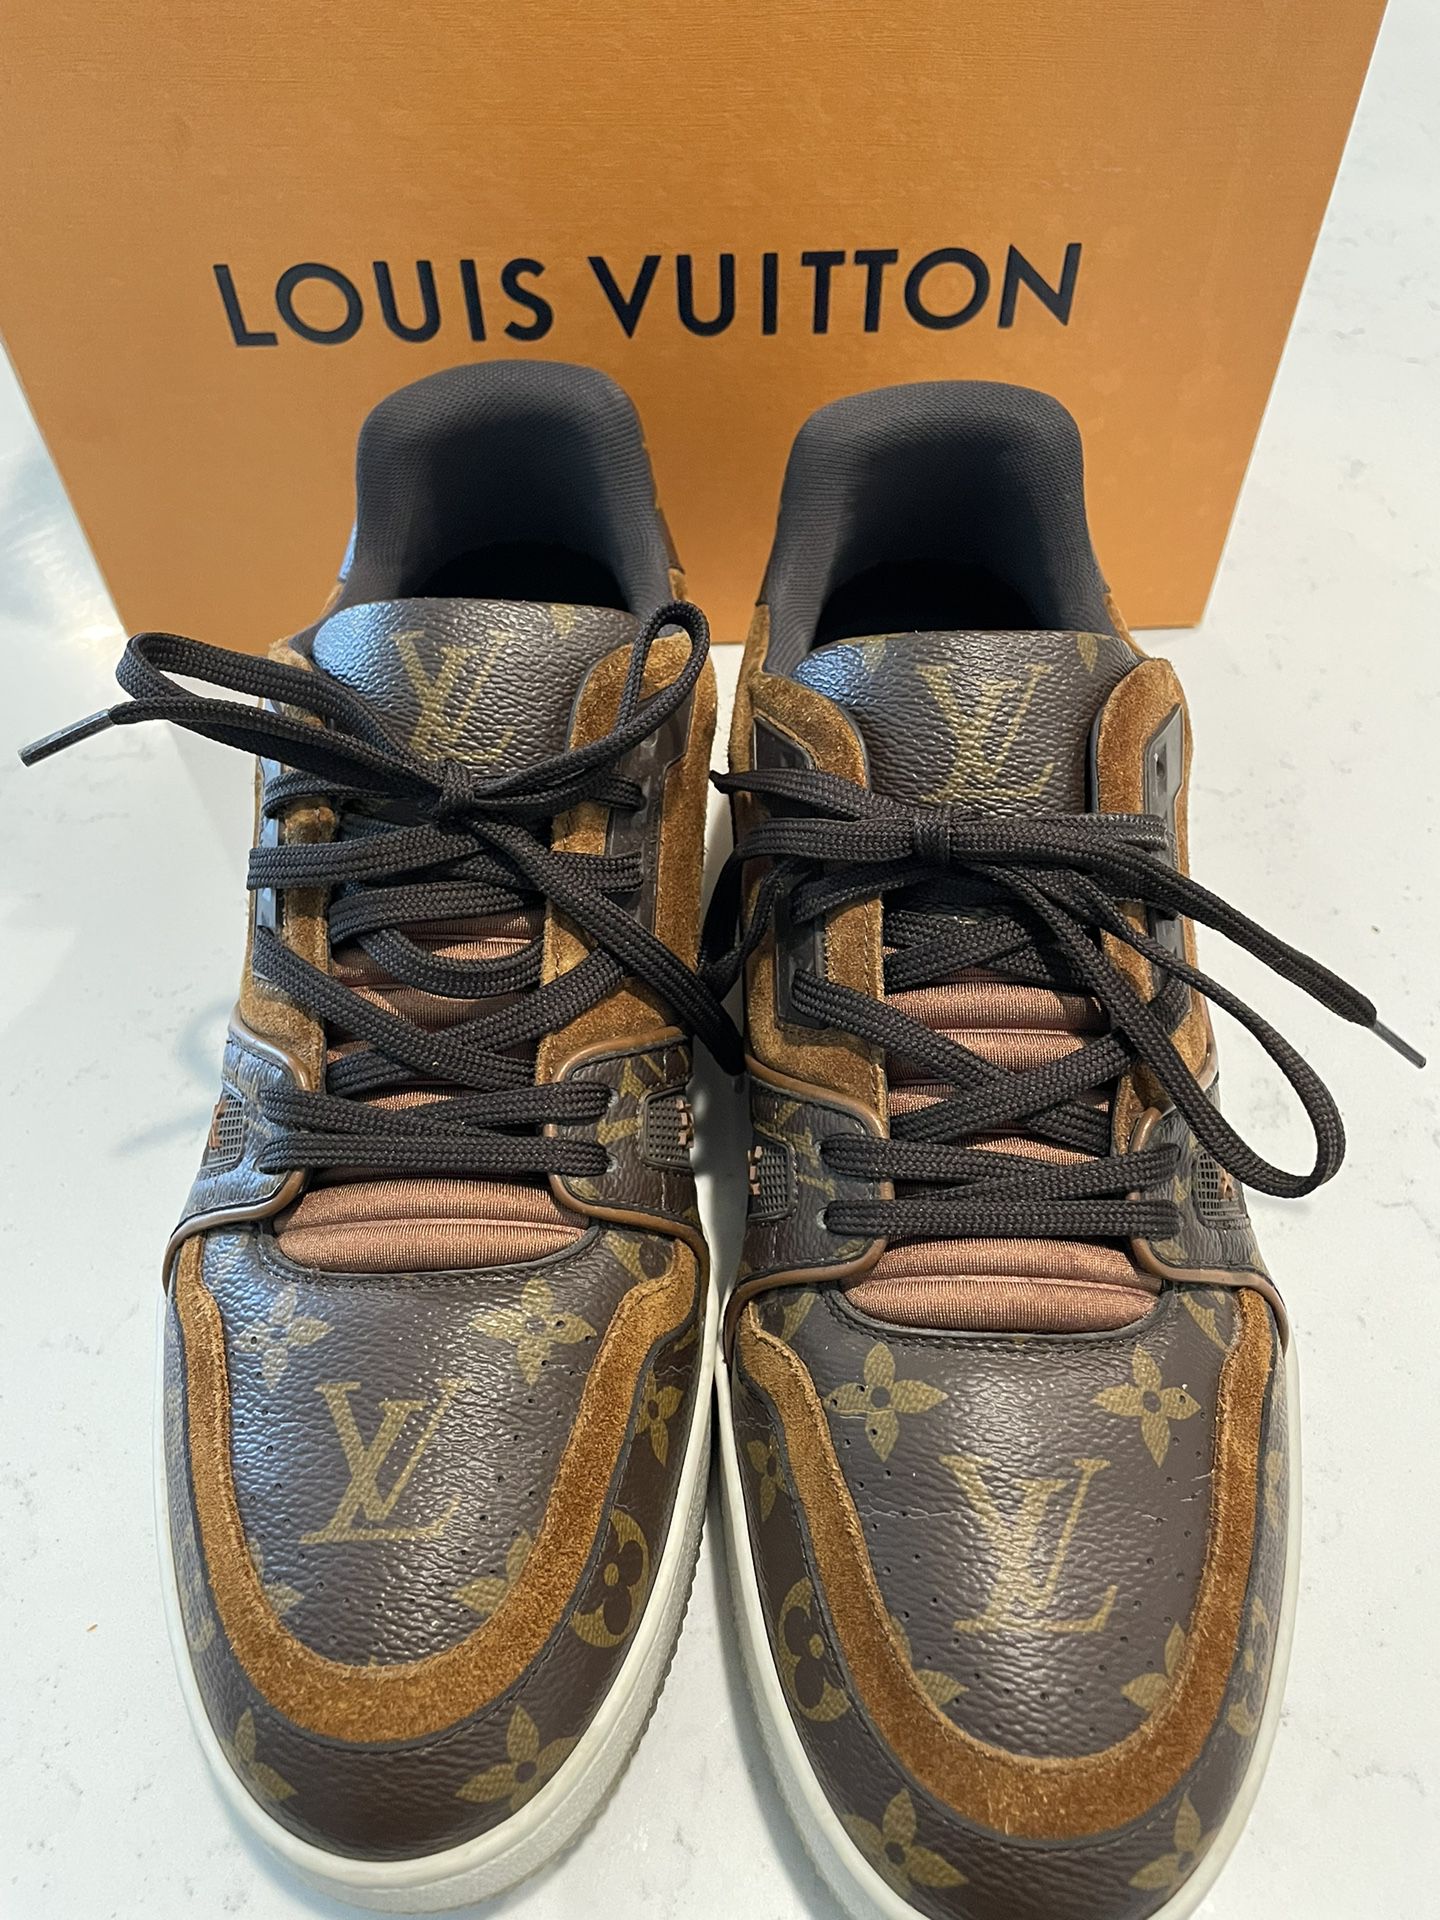 Louis Vuitton Trainer 60 for Sale in El Mirage, AZ - OfferUp